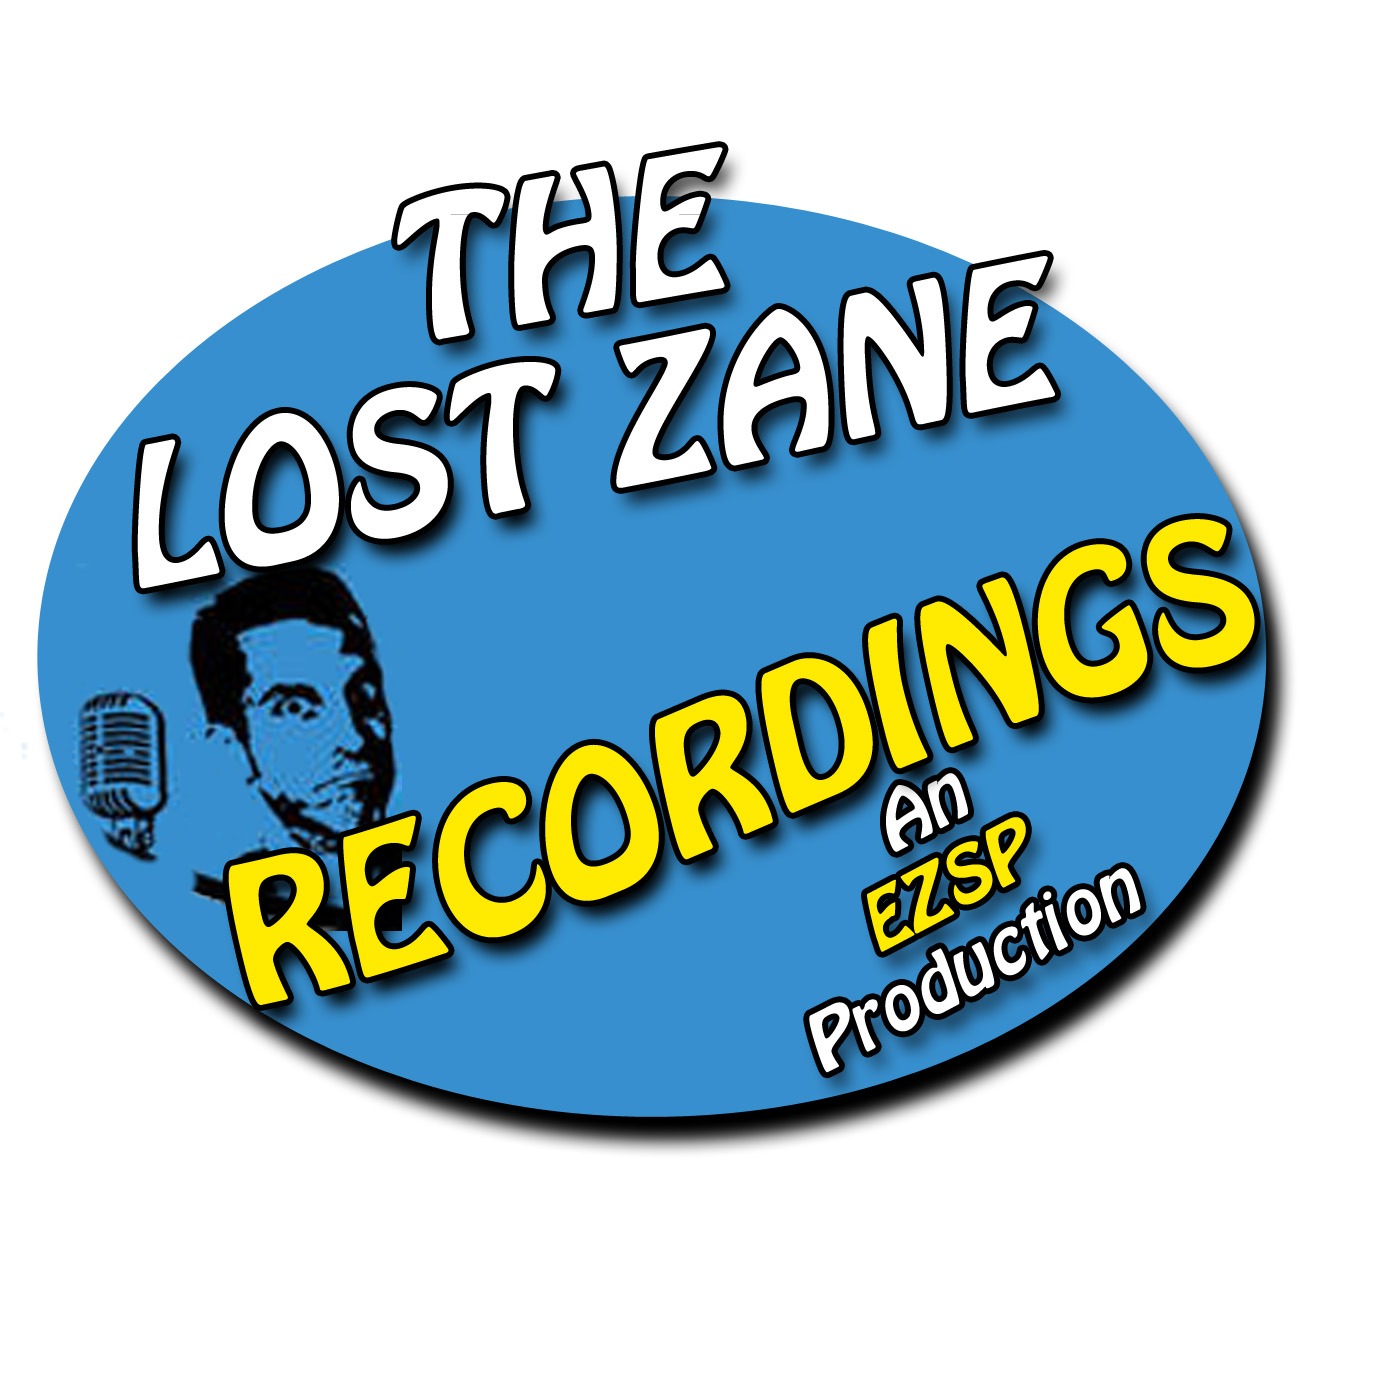 Lost Zane Recordings Highlight ~ The Eric Zane Show Players presents 